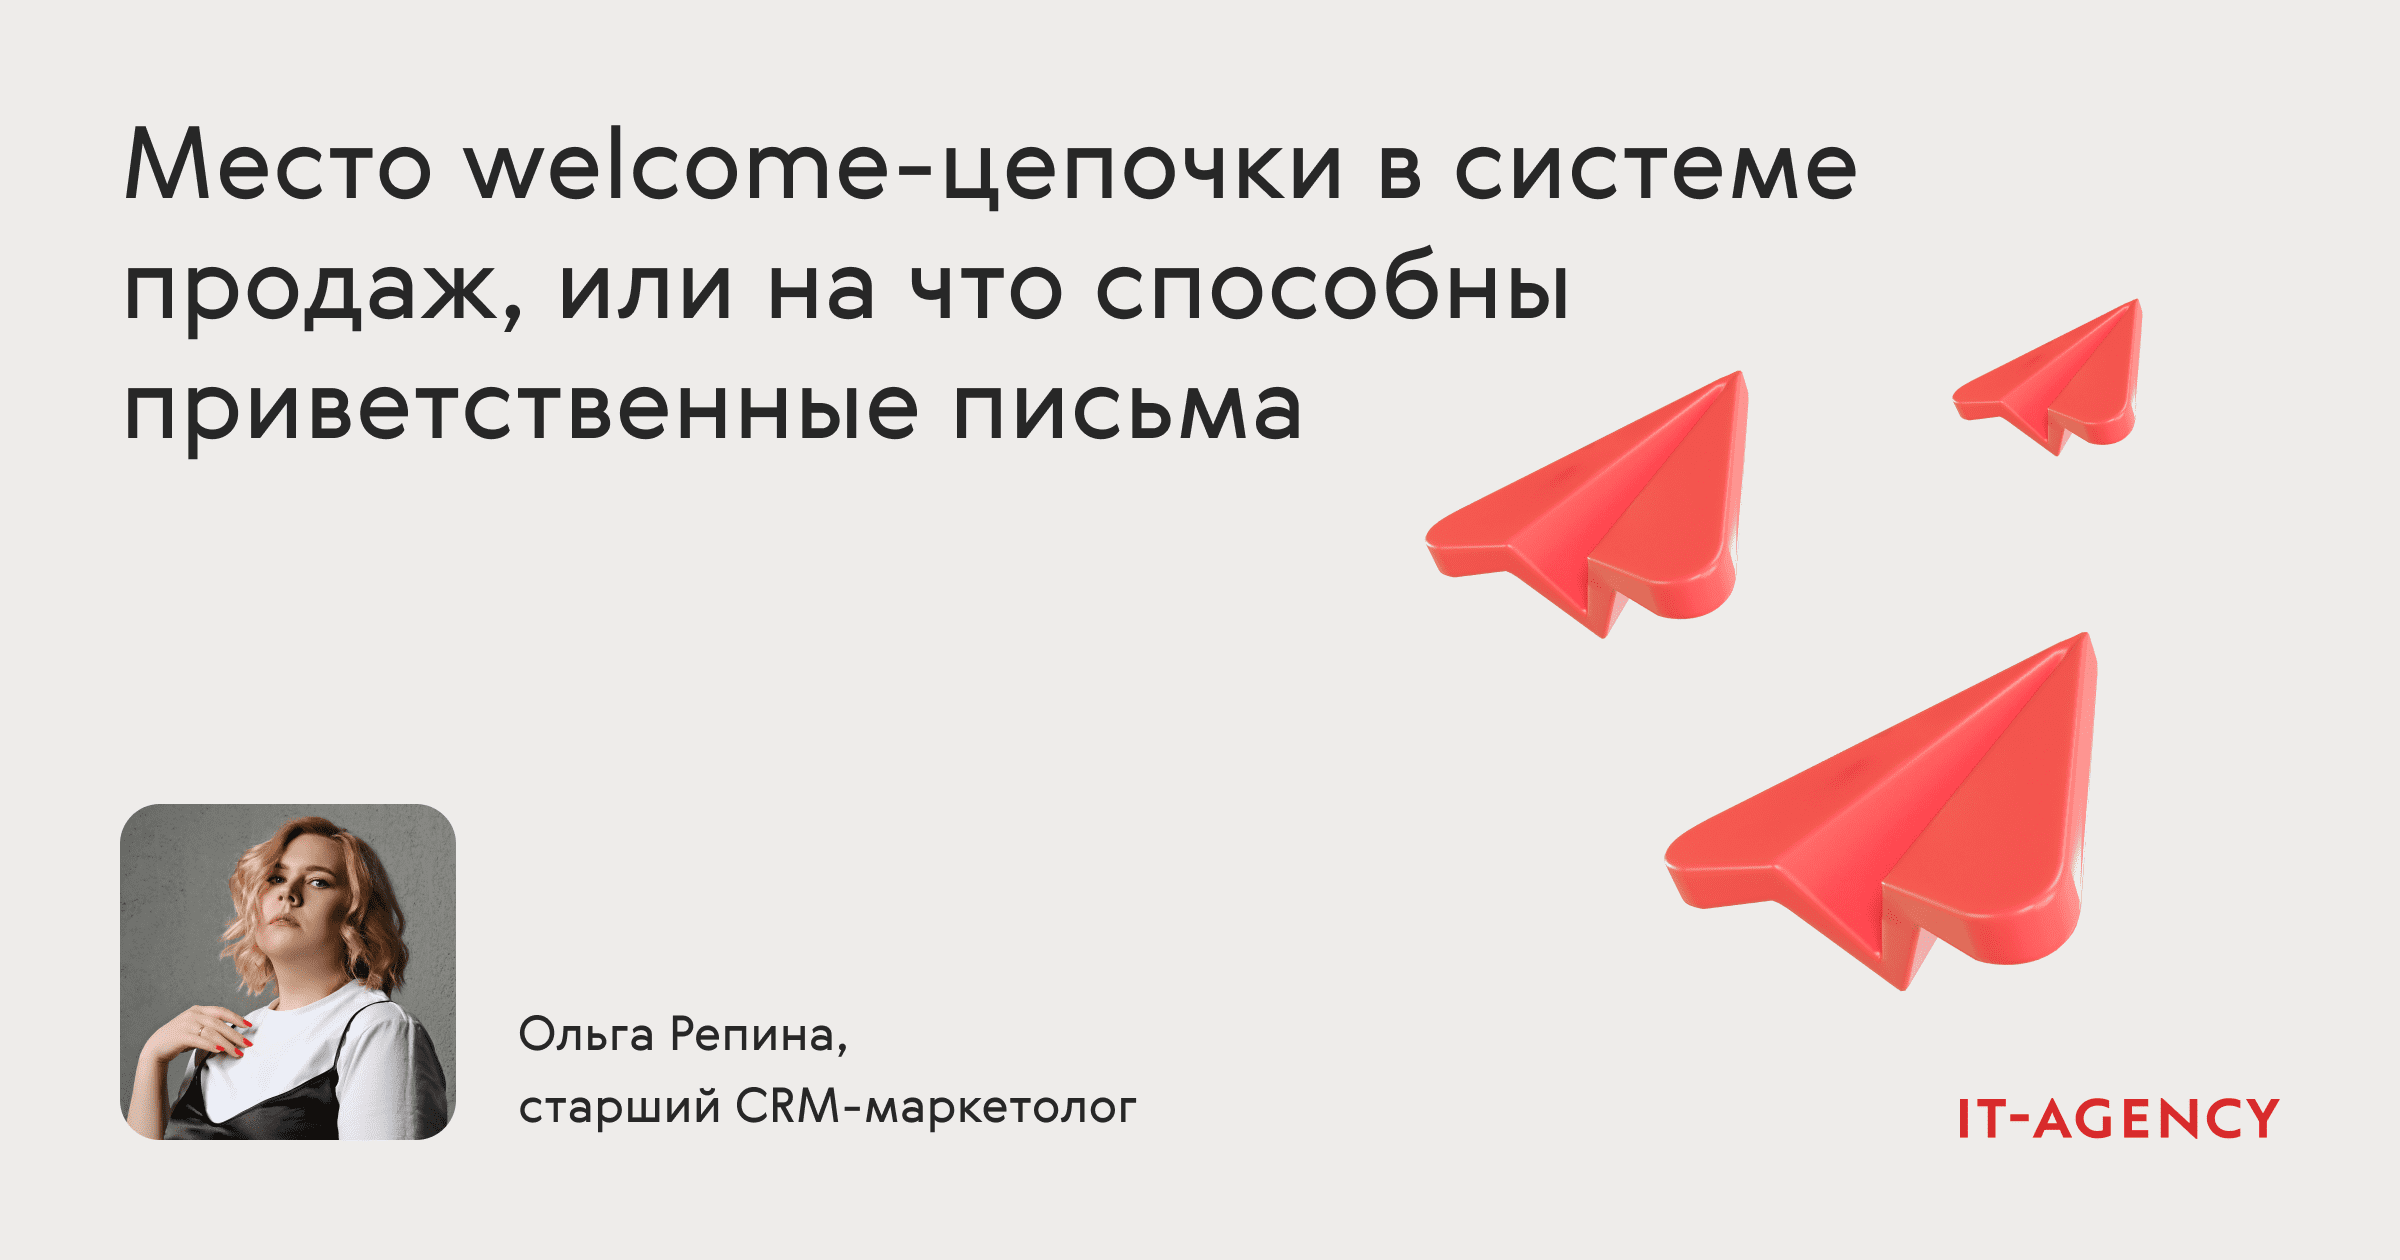 Welcome Kit от Команды ВКонтакте: как мы встречаем новых коллег